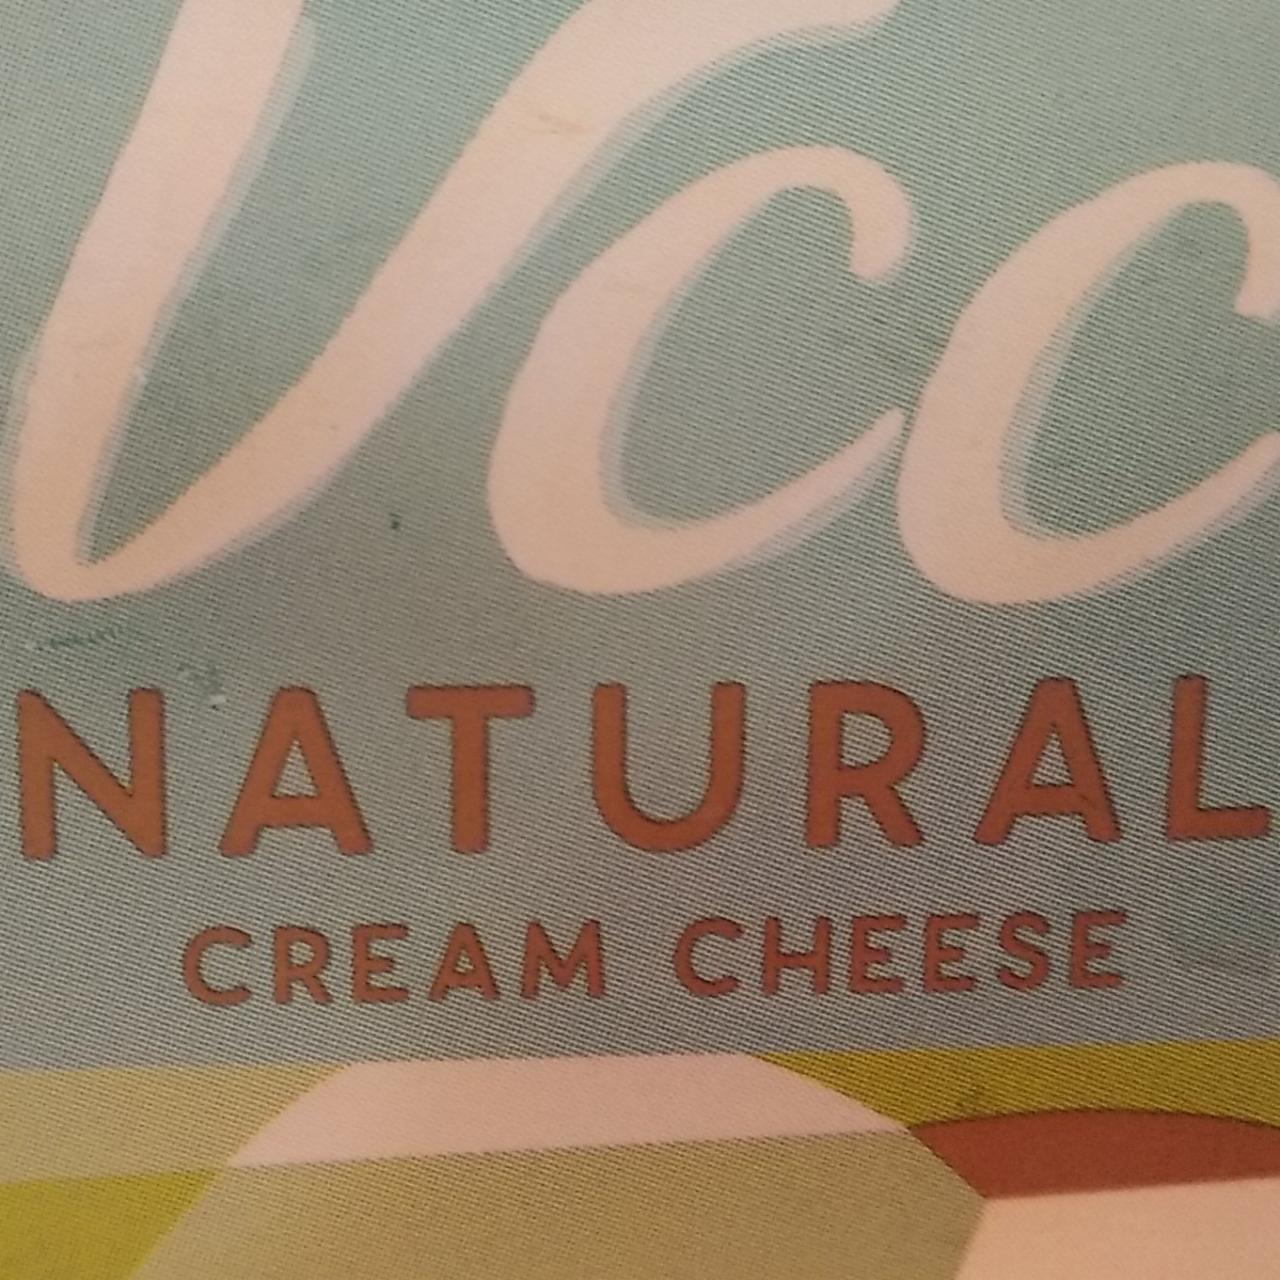 Фото - Крем-сыр Natural Cream Cheese Natural Vcc